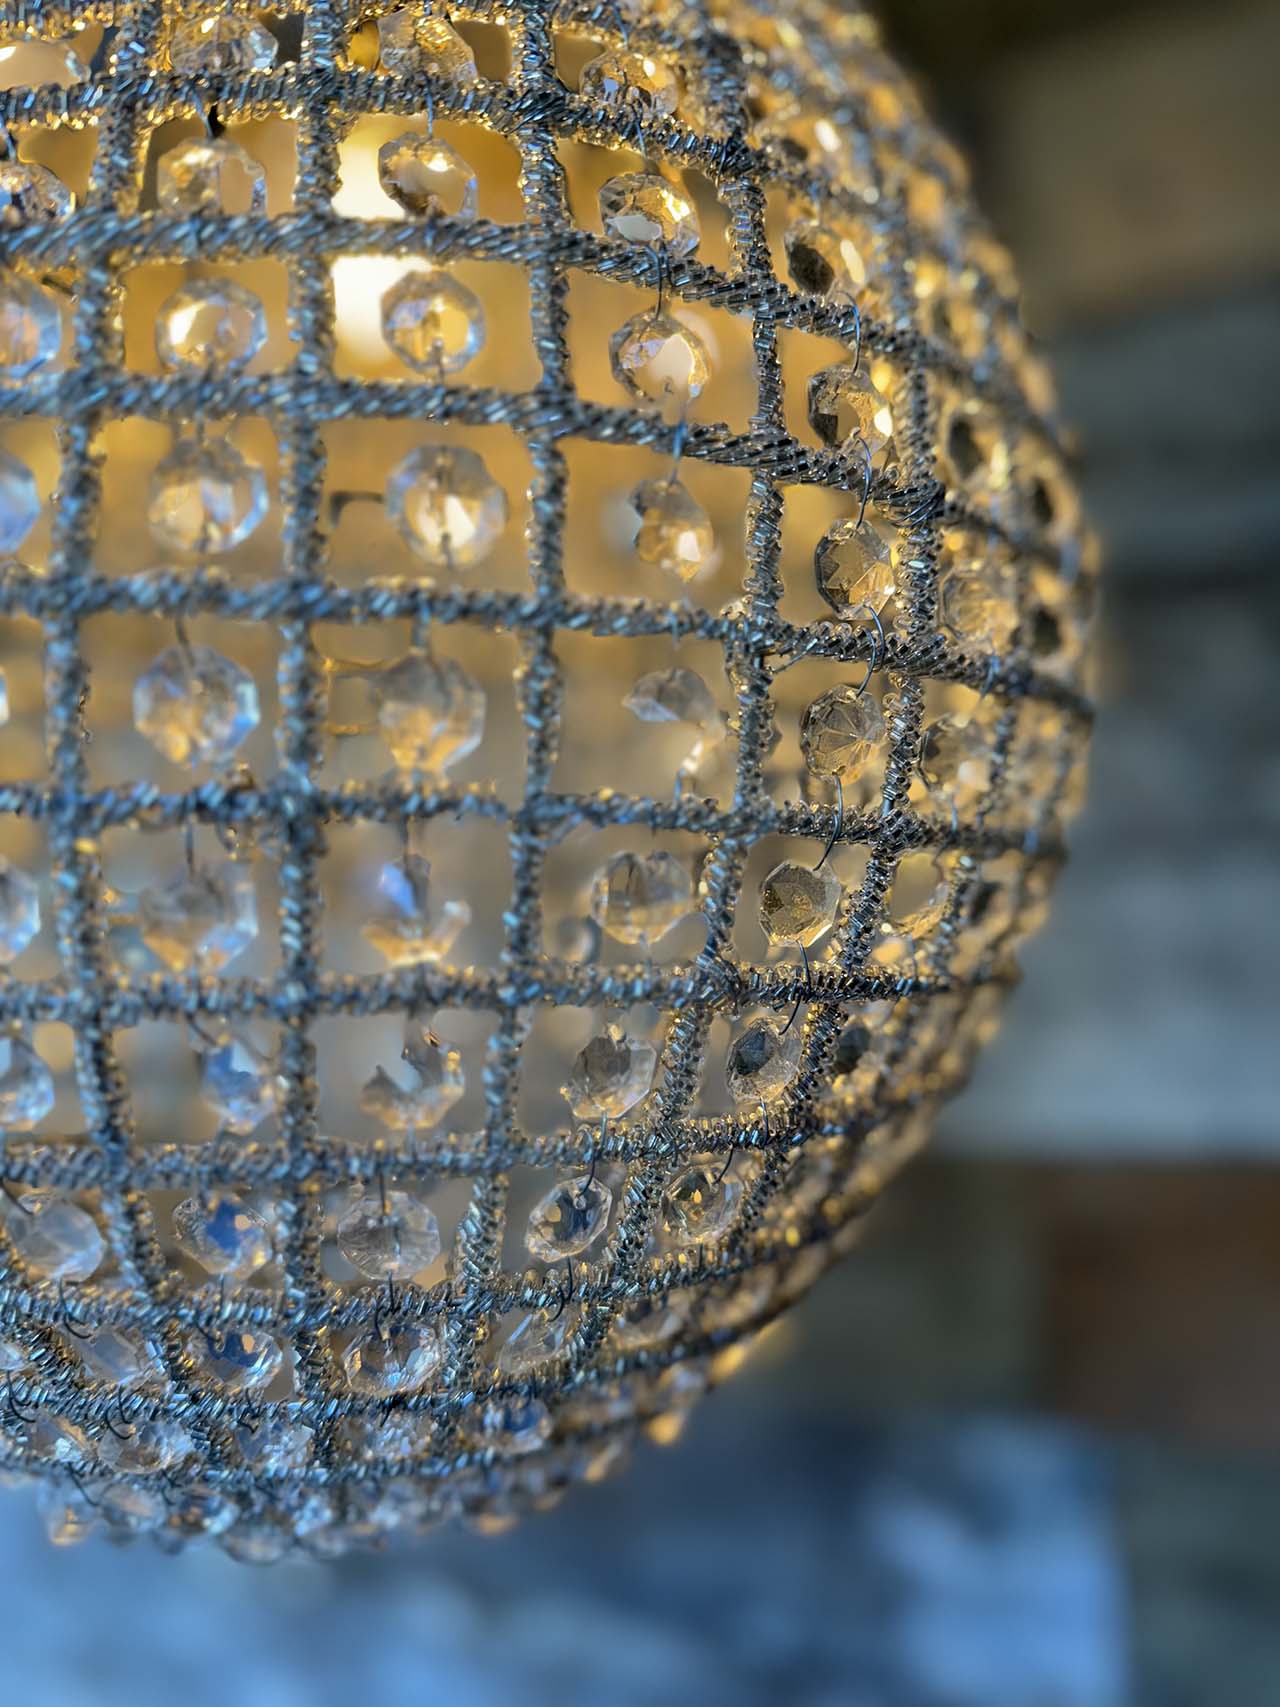 Beautiful medium pear shaped chandelier